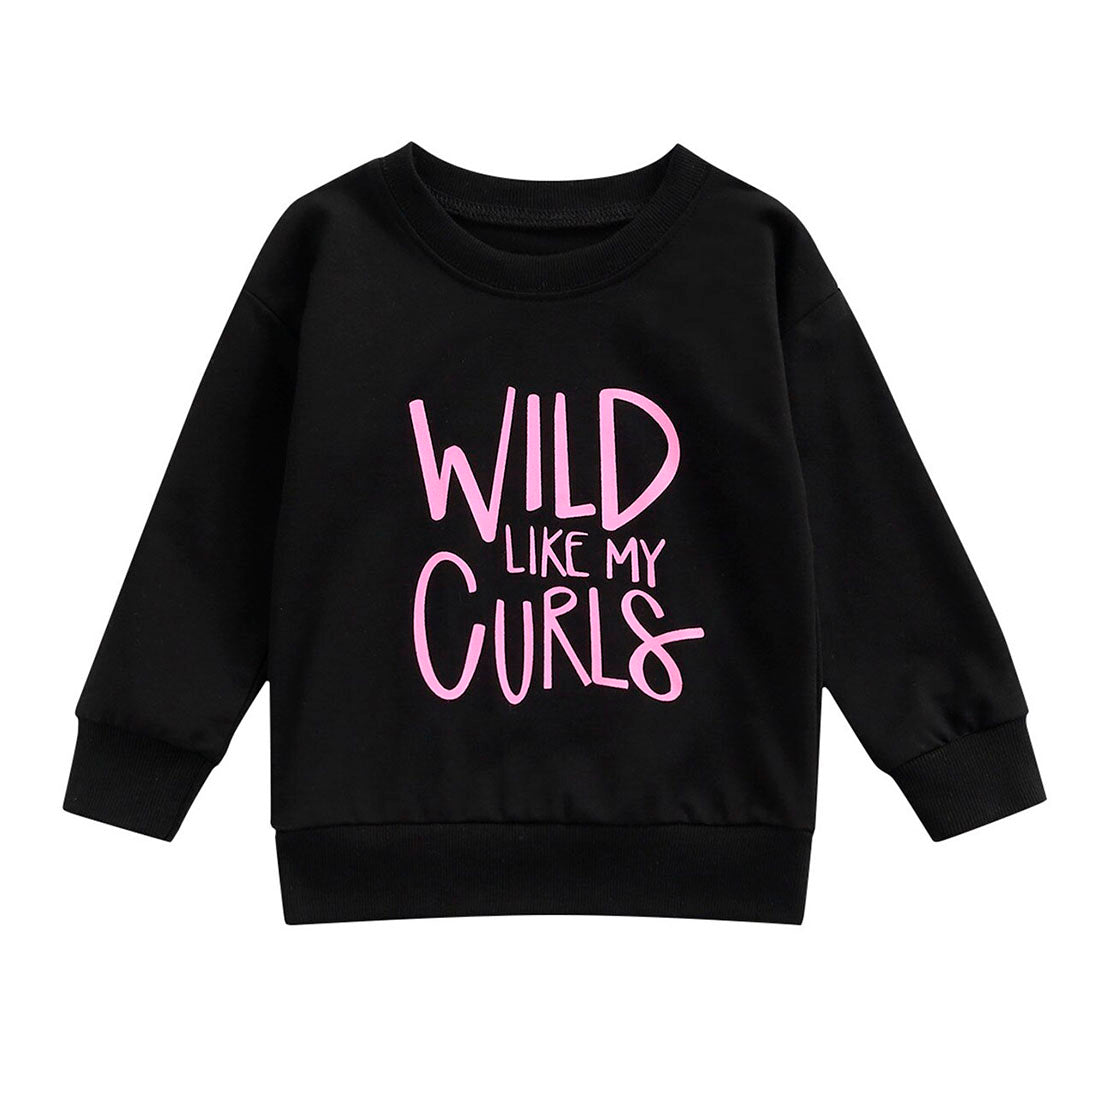 Wild Like My Curls Toddler Sweatshirt Black 2T 